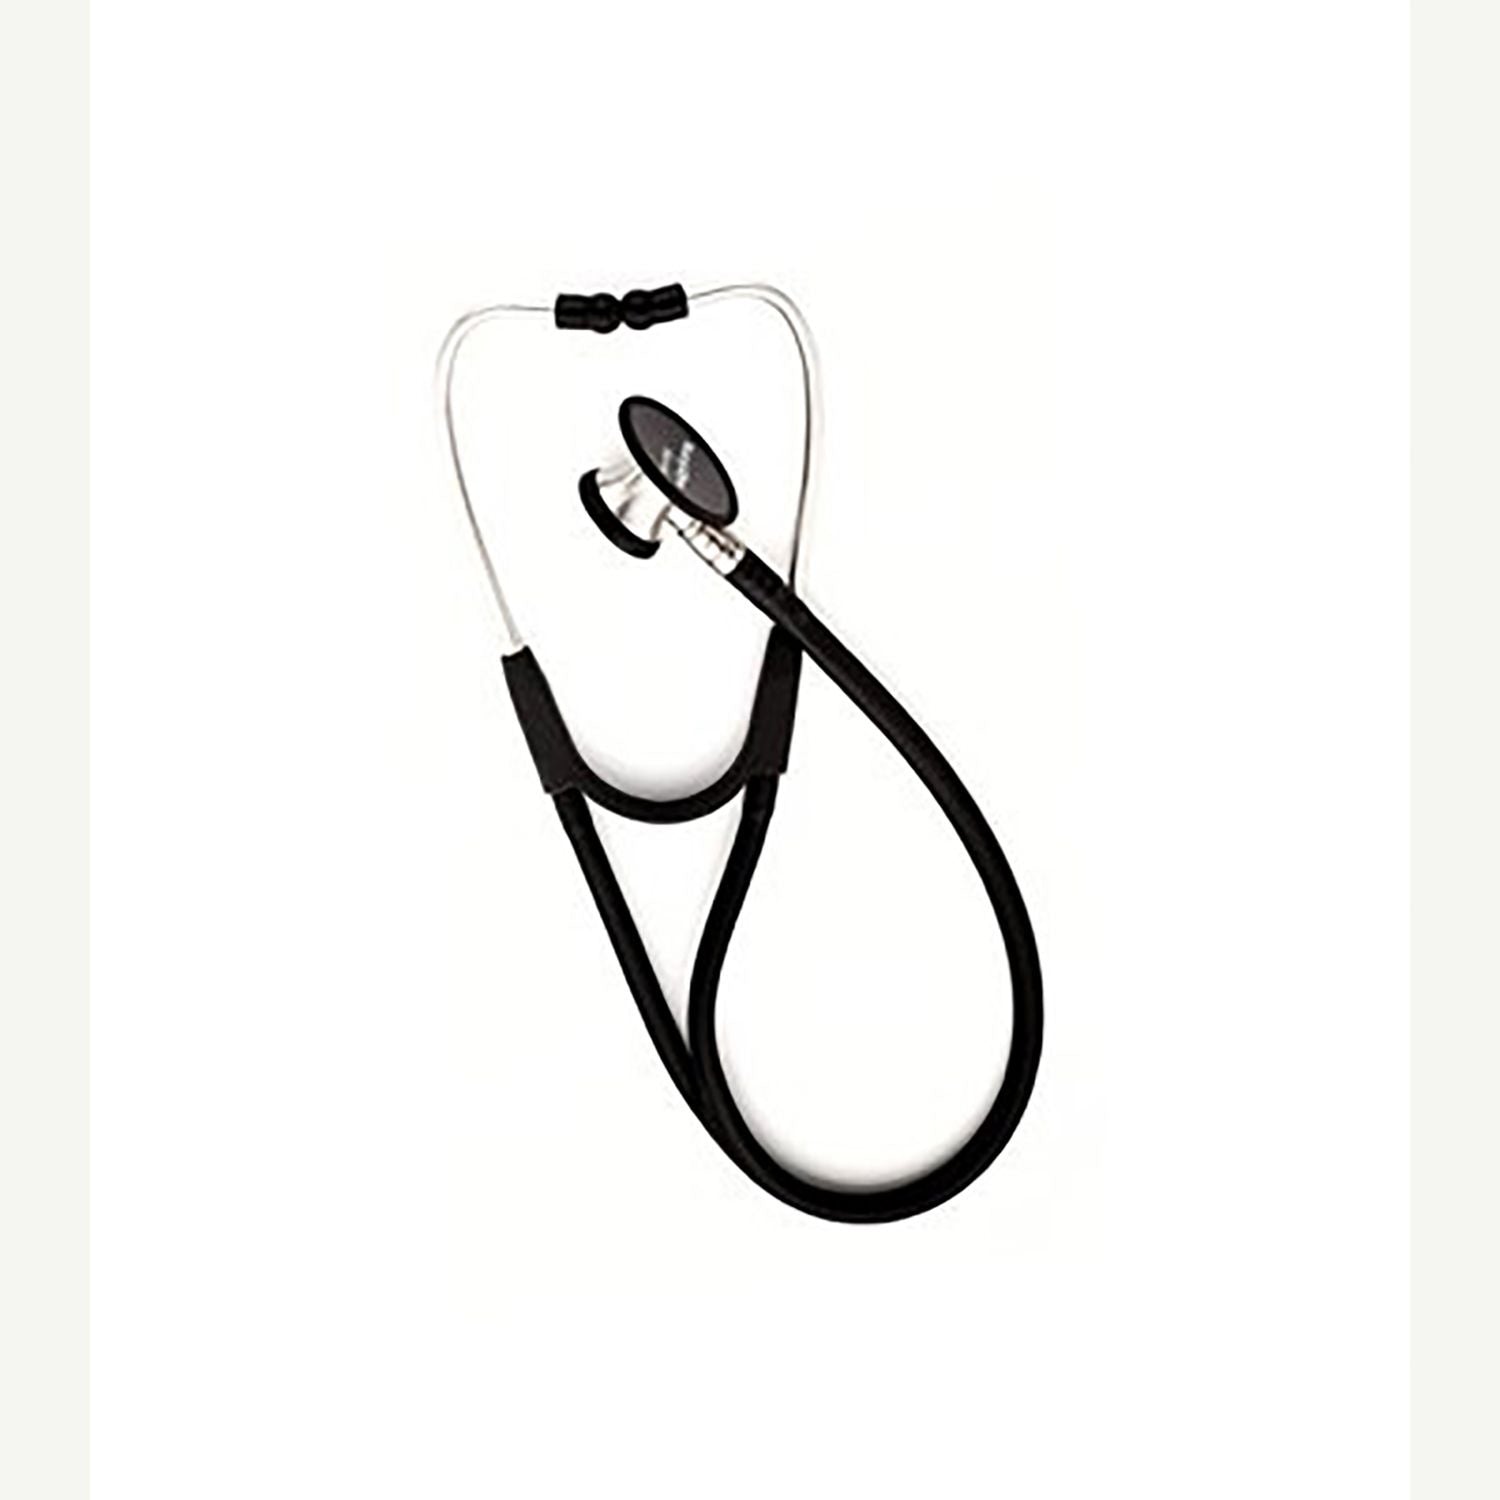 Harvey Elite Stethoscope | Black